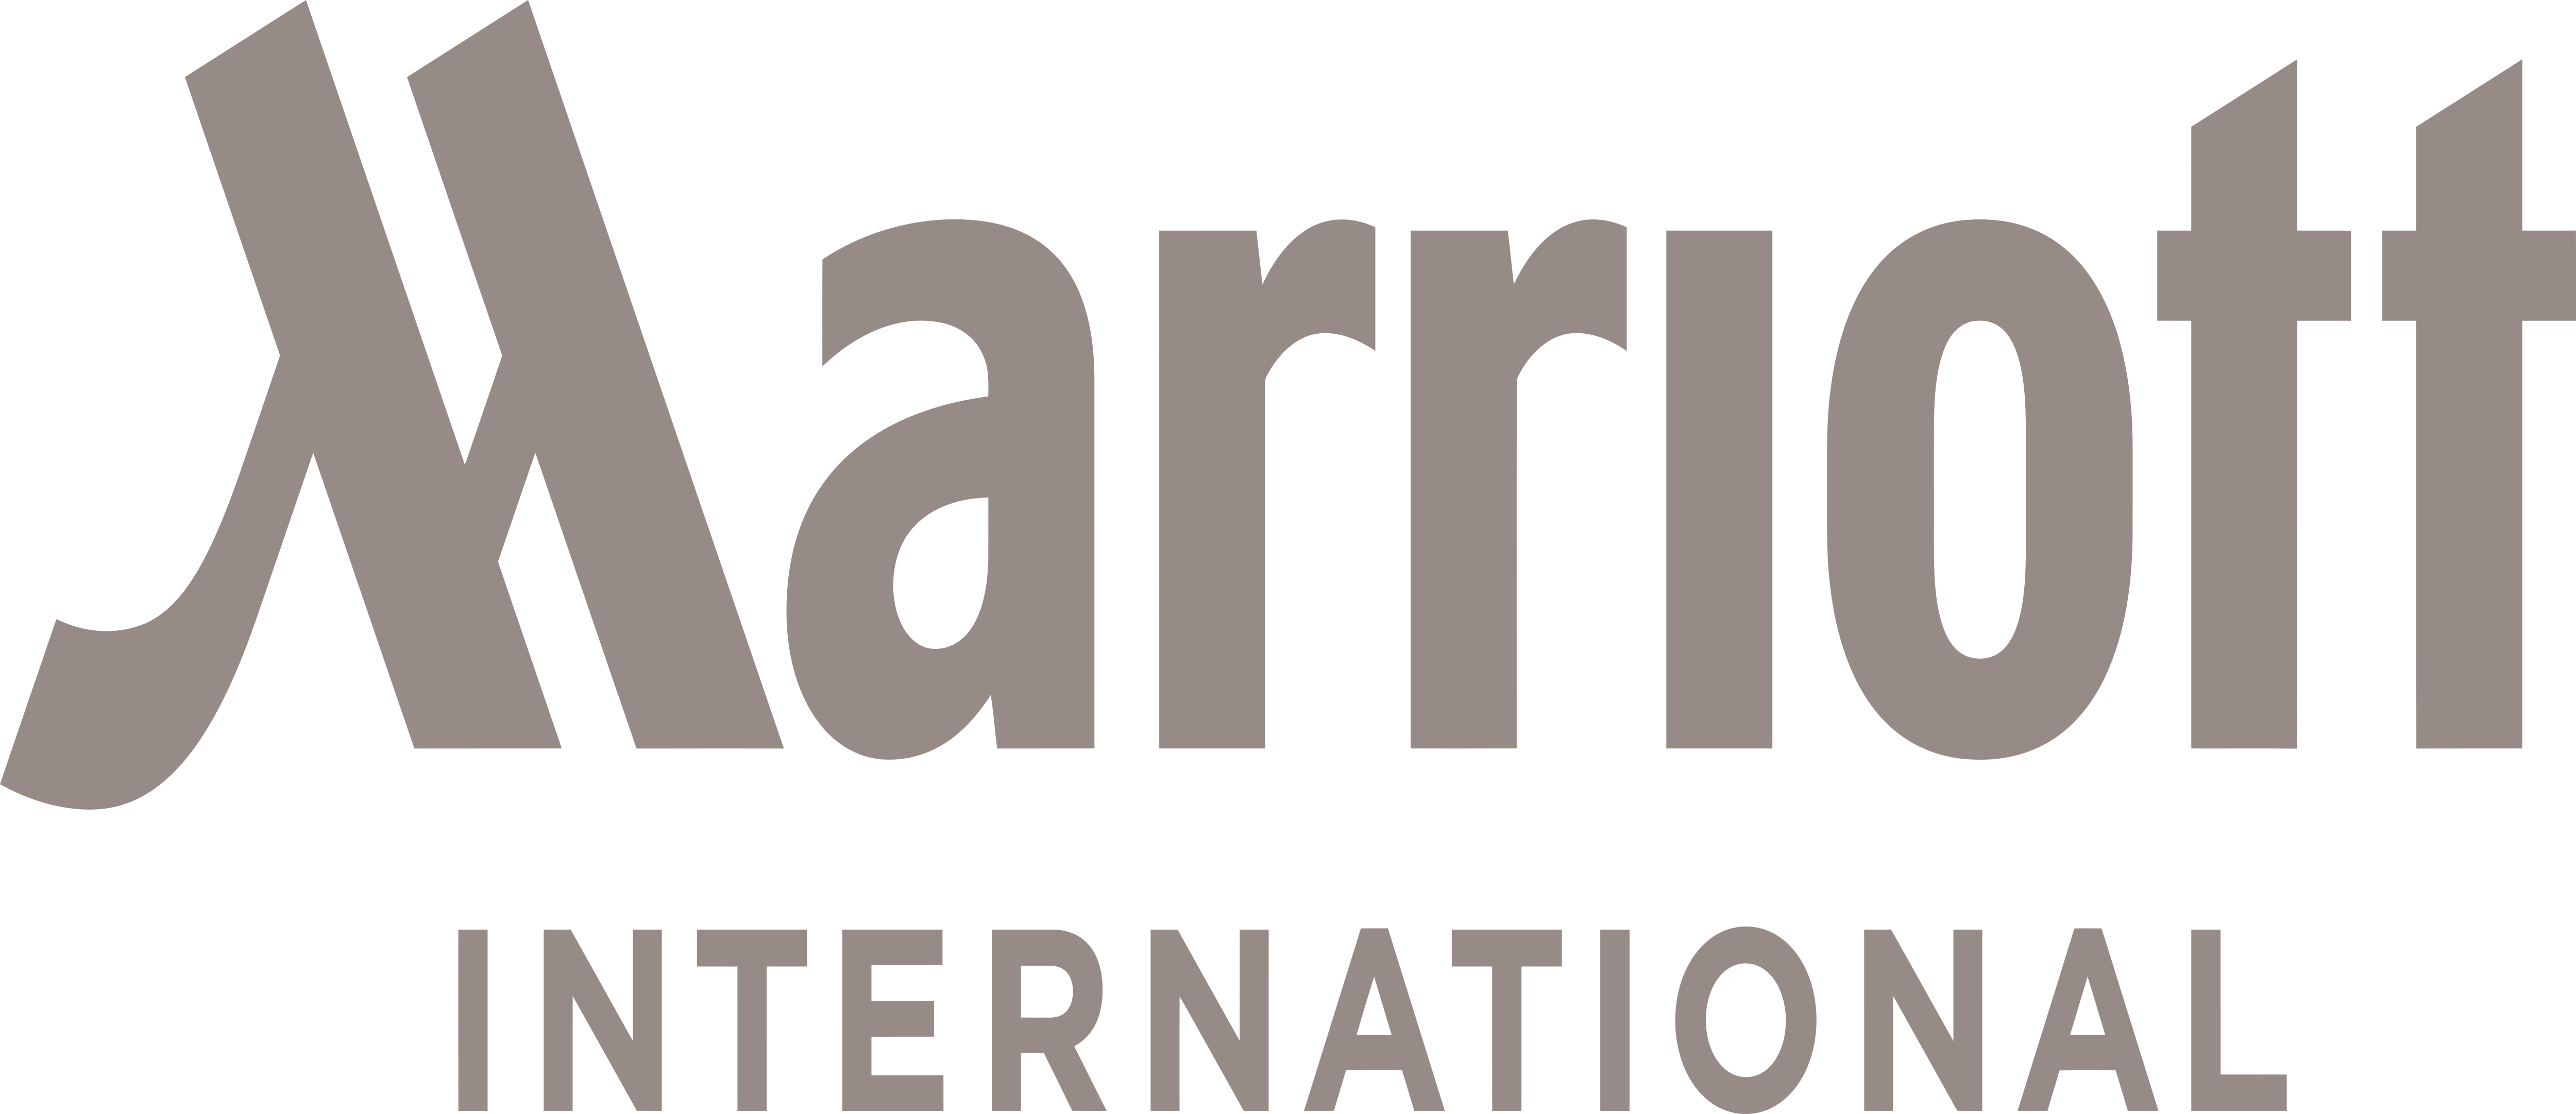 Marriott International Marrio